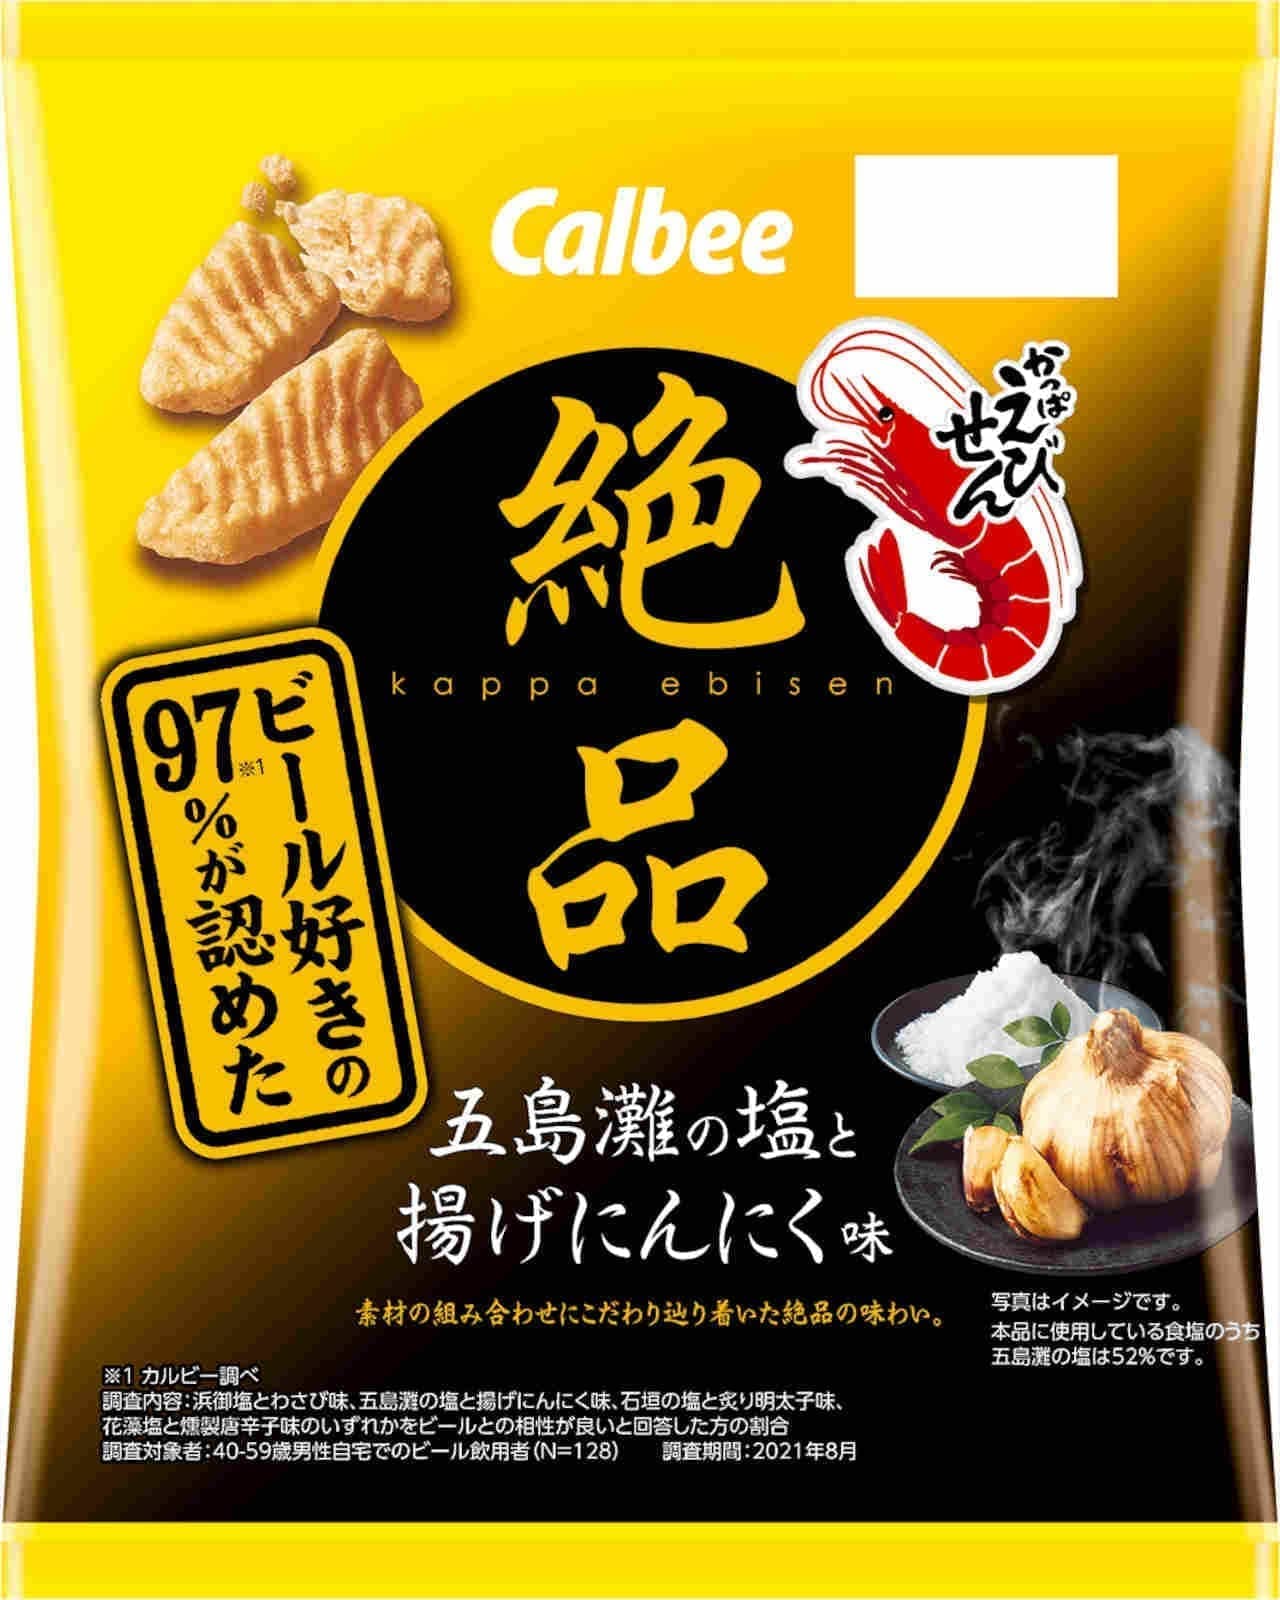 Calbee "Zesshin Kappa Ebisen - salt and fried garlic flavored from the Sea of Gotoh